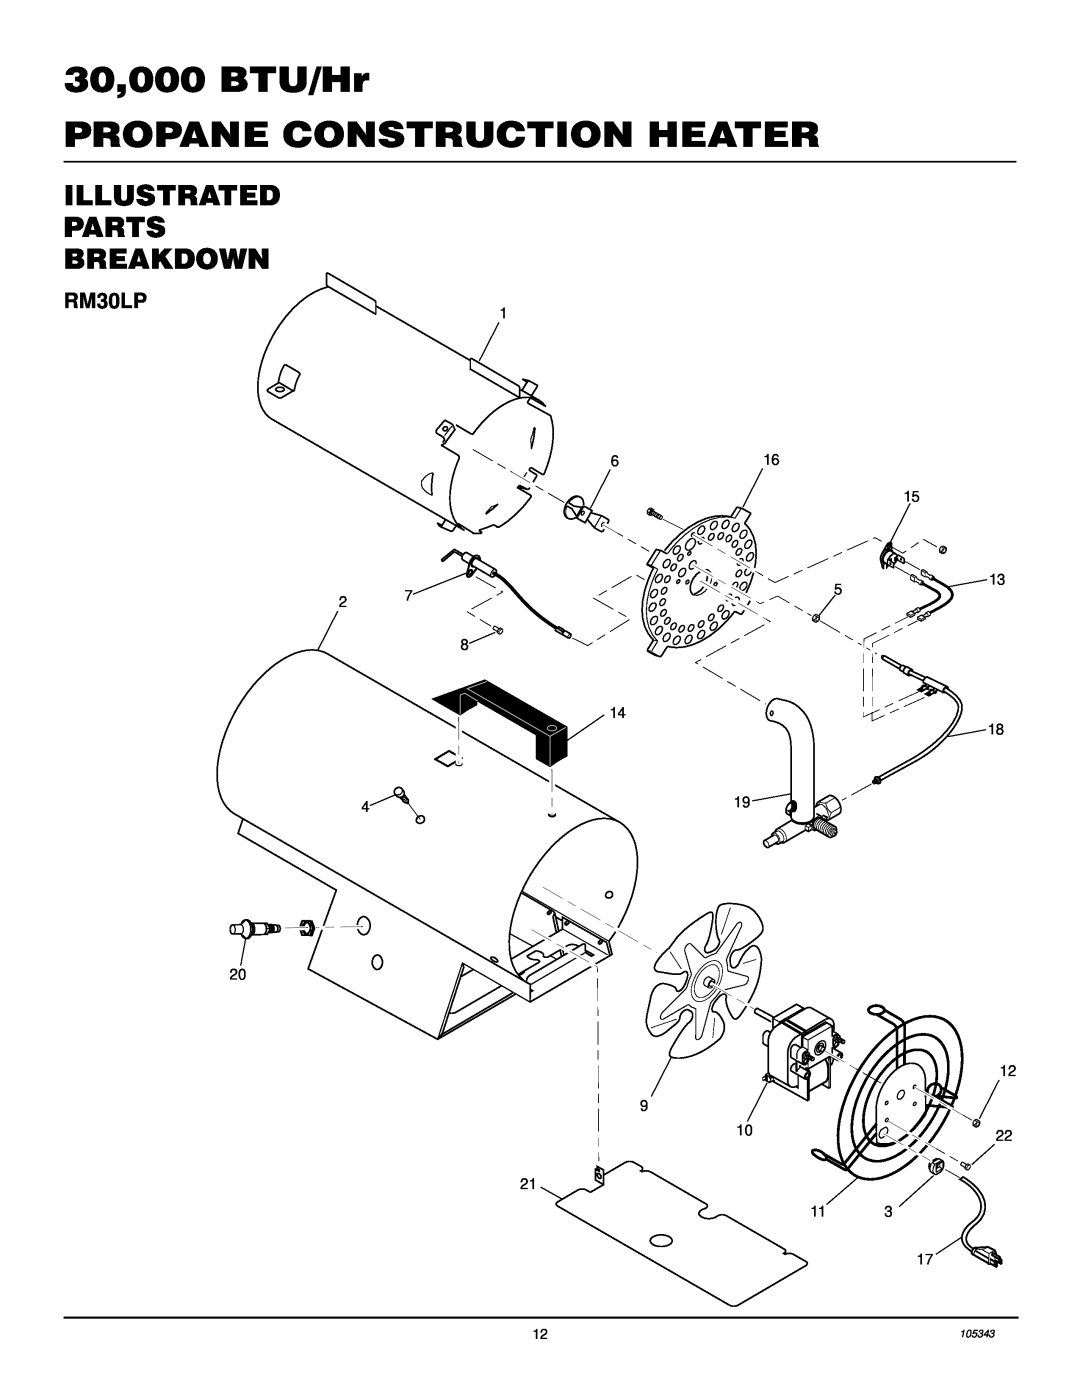 Desa RM30LP owner manual Illustrated Parts Breakdown, 30,000 BTU/Hr PROPANE CONSTRUCTION HEATER 